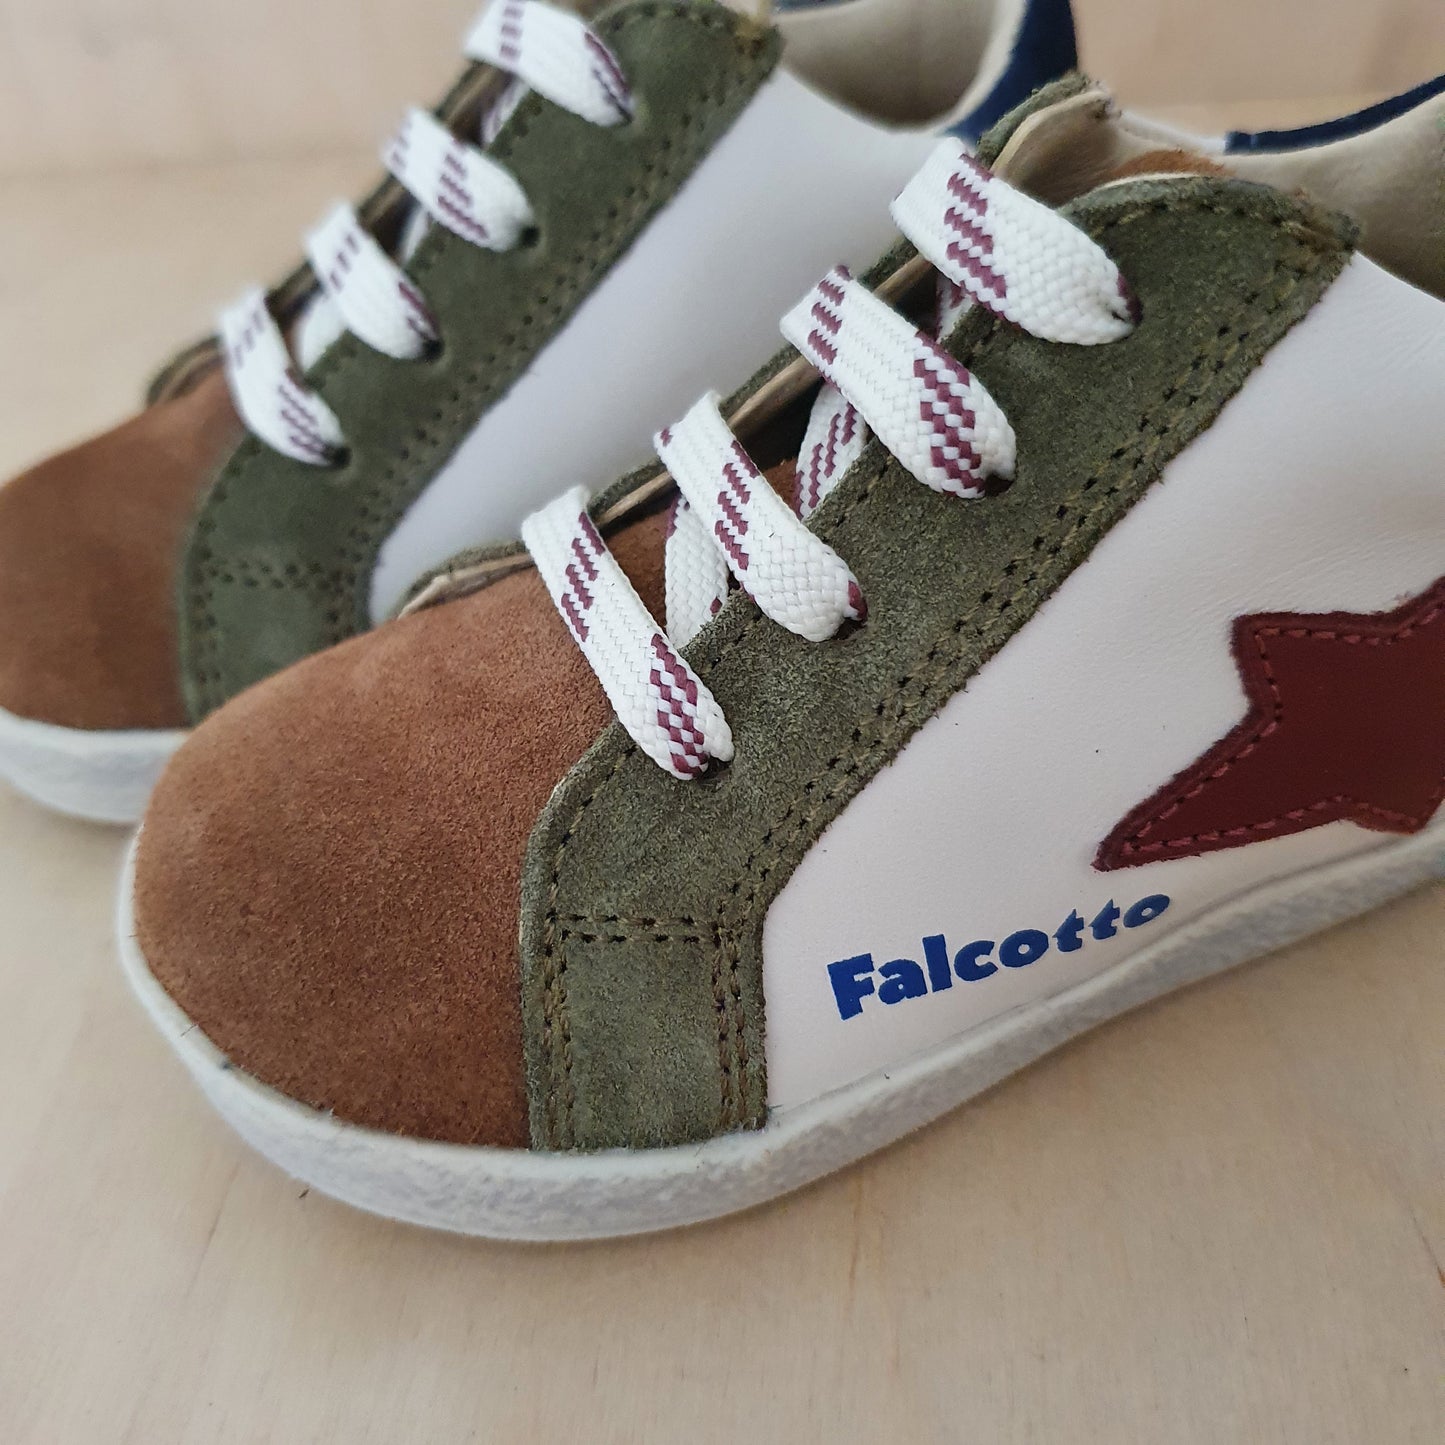 FALCOTTO - stapsneaker alnoite high - eyelets brown milk